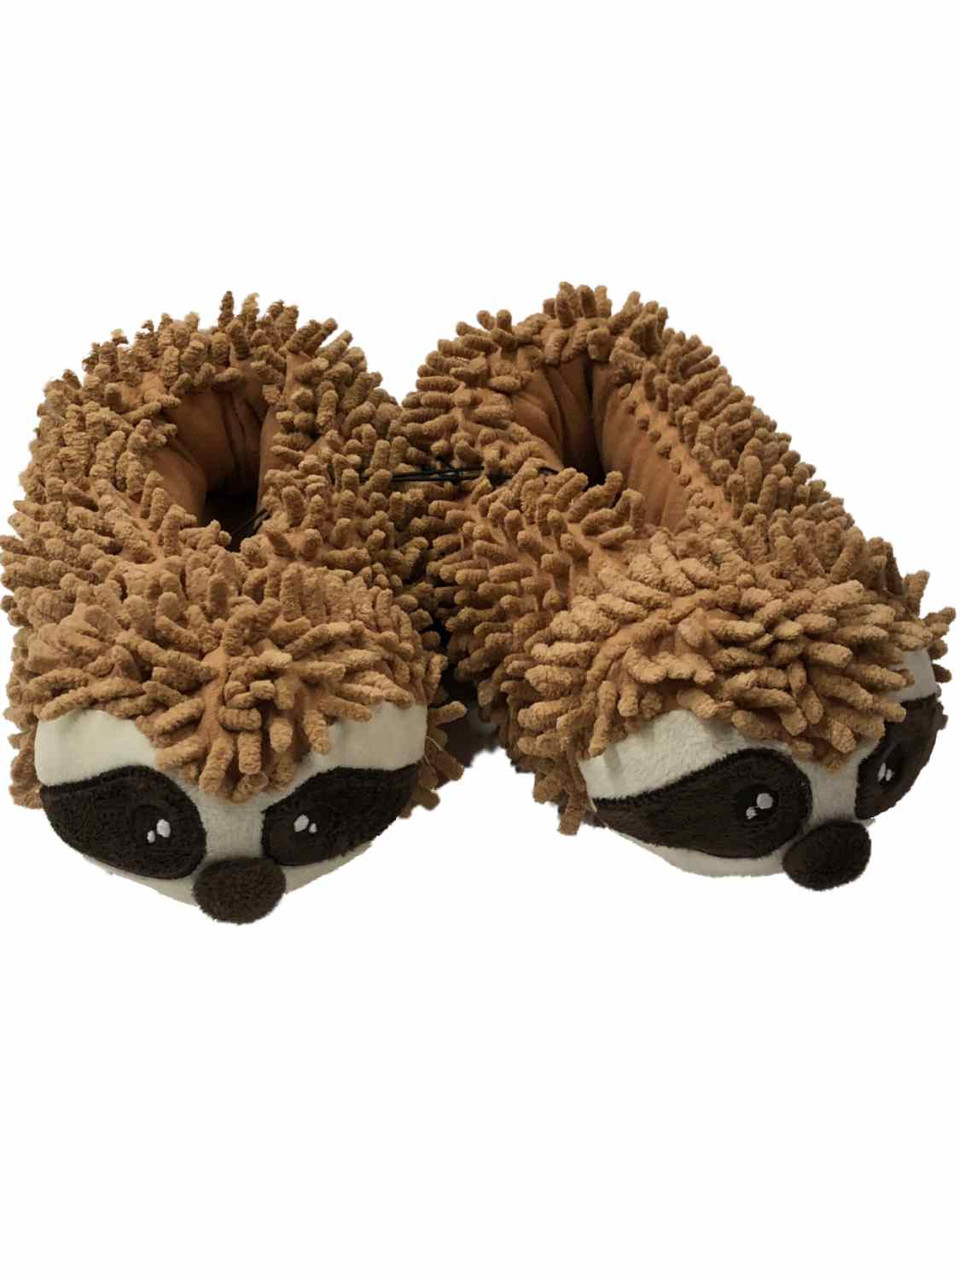 animal house slippers